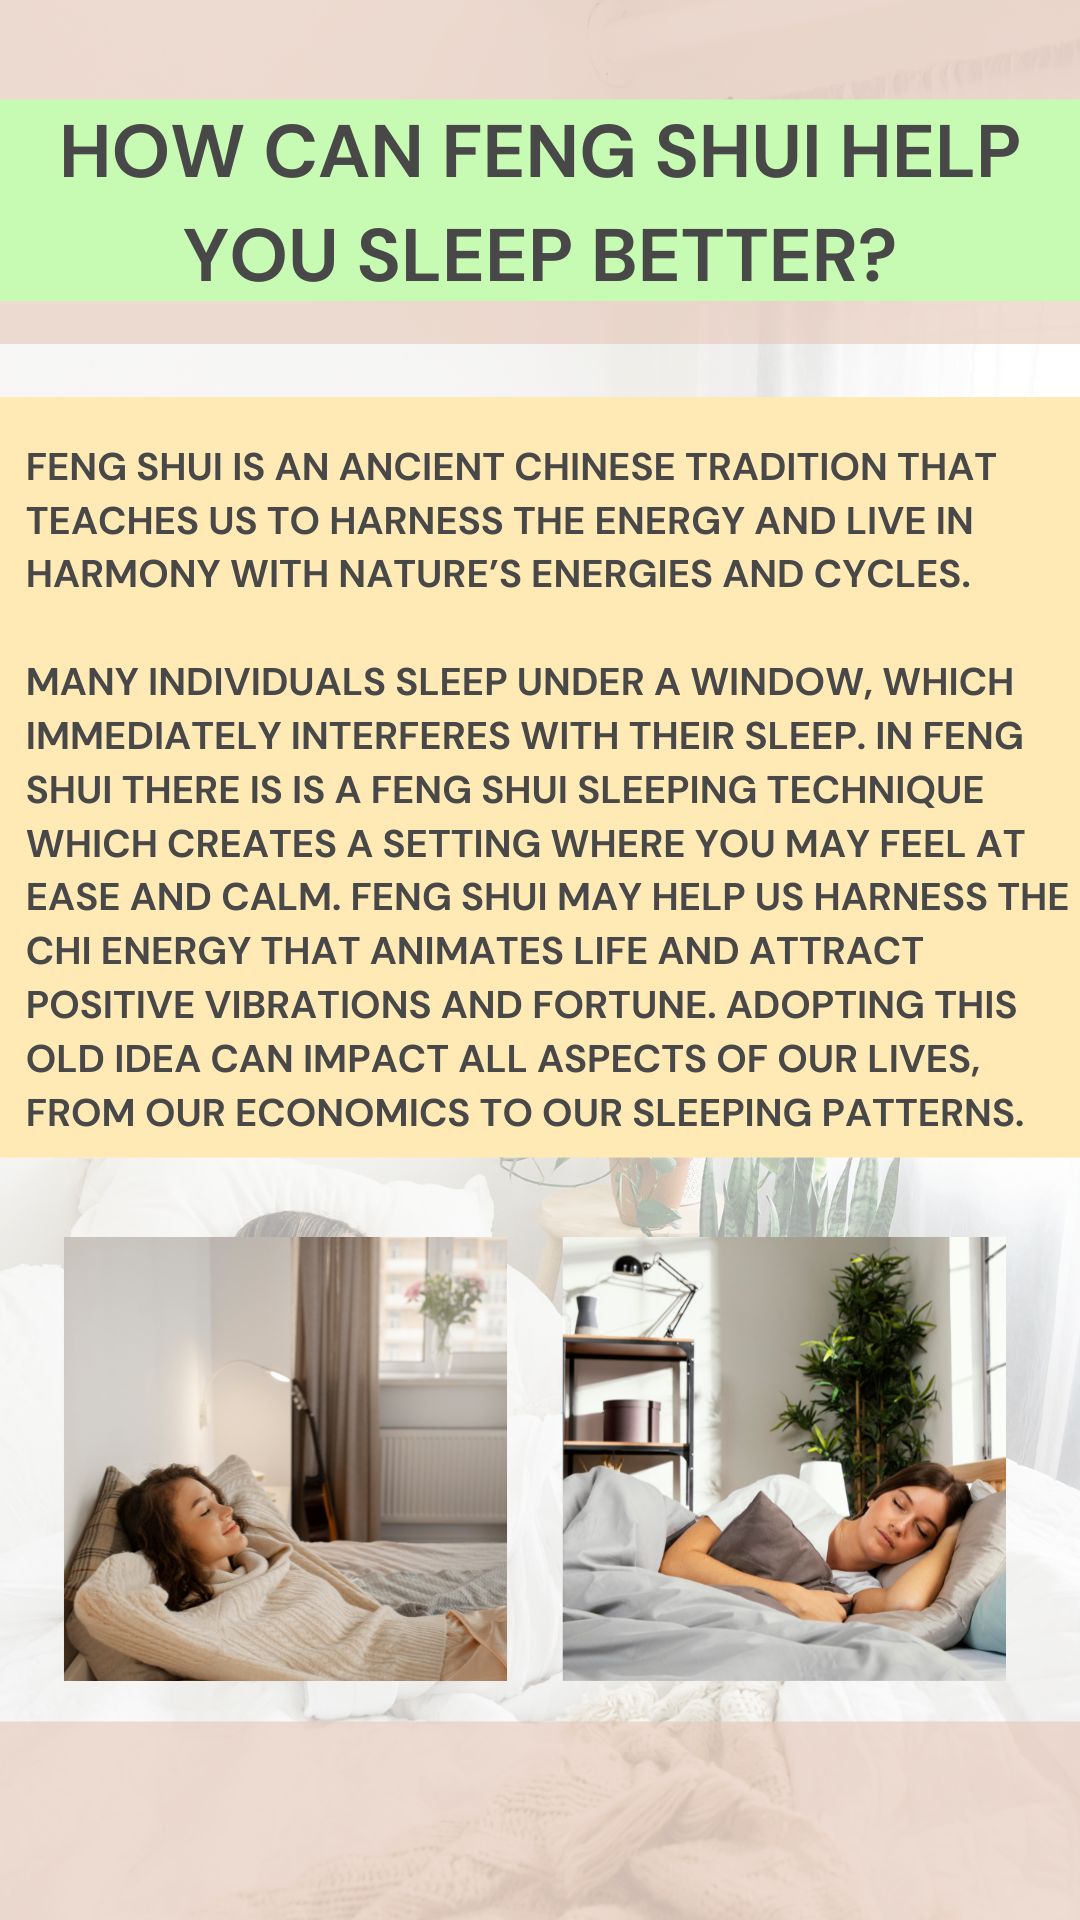 how can feng shui help you sleep better?